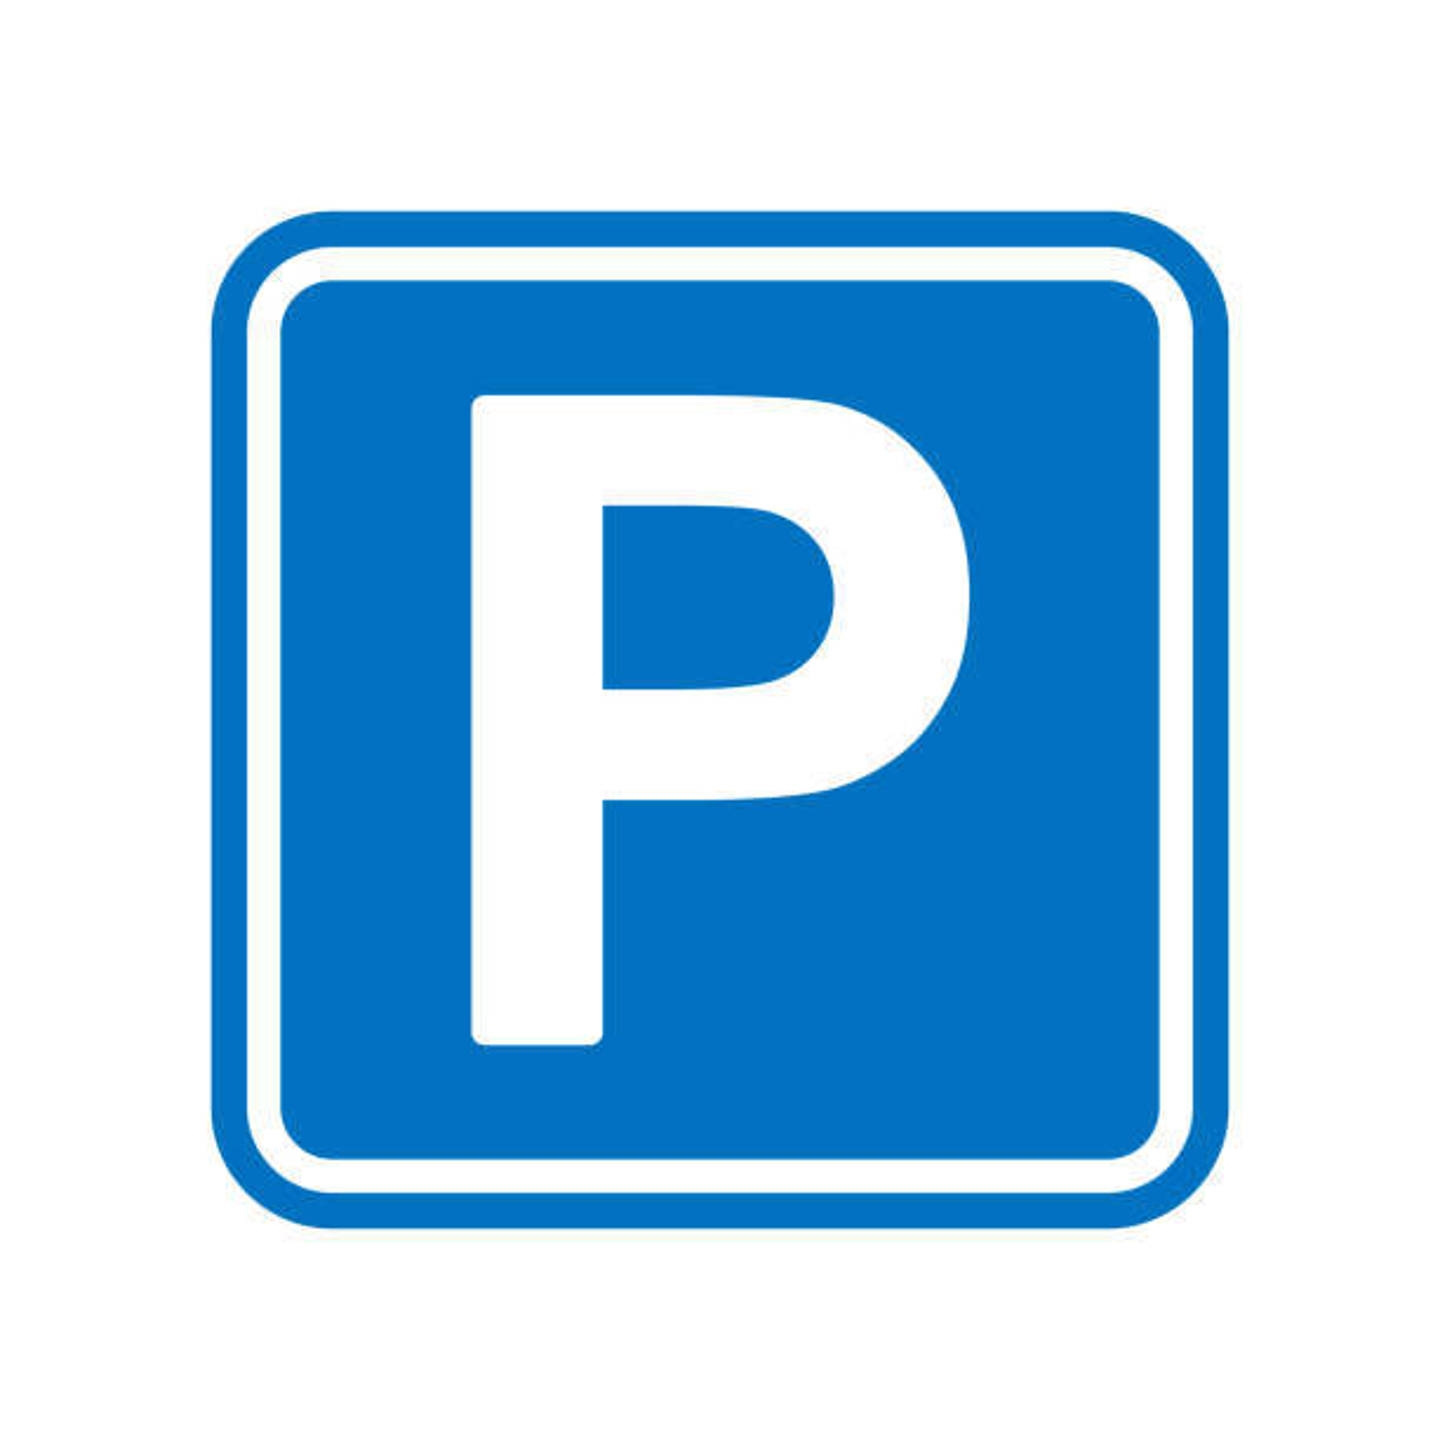 Parking te  koop in Sint-Jans-Molenbeek 1080 15450.00€  slaapkamers 12.50m² - Zoekertje 1324762